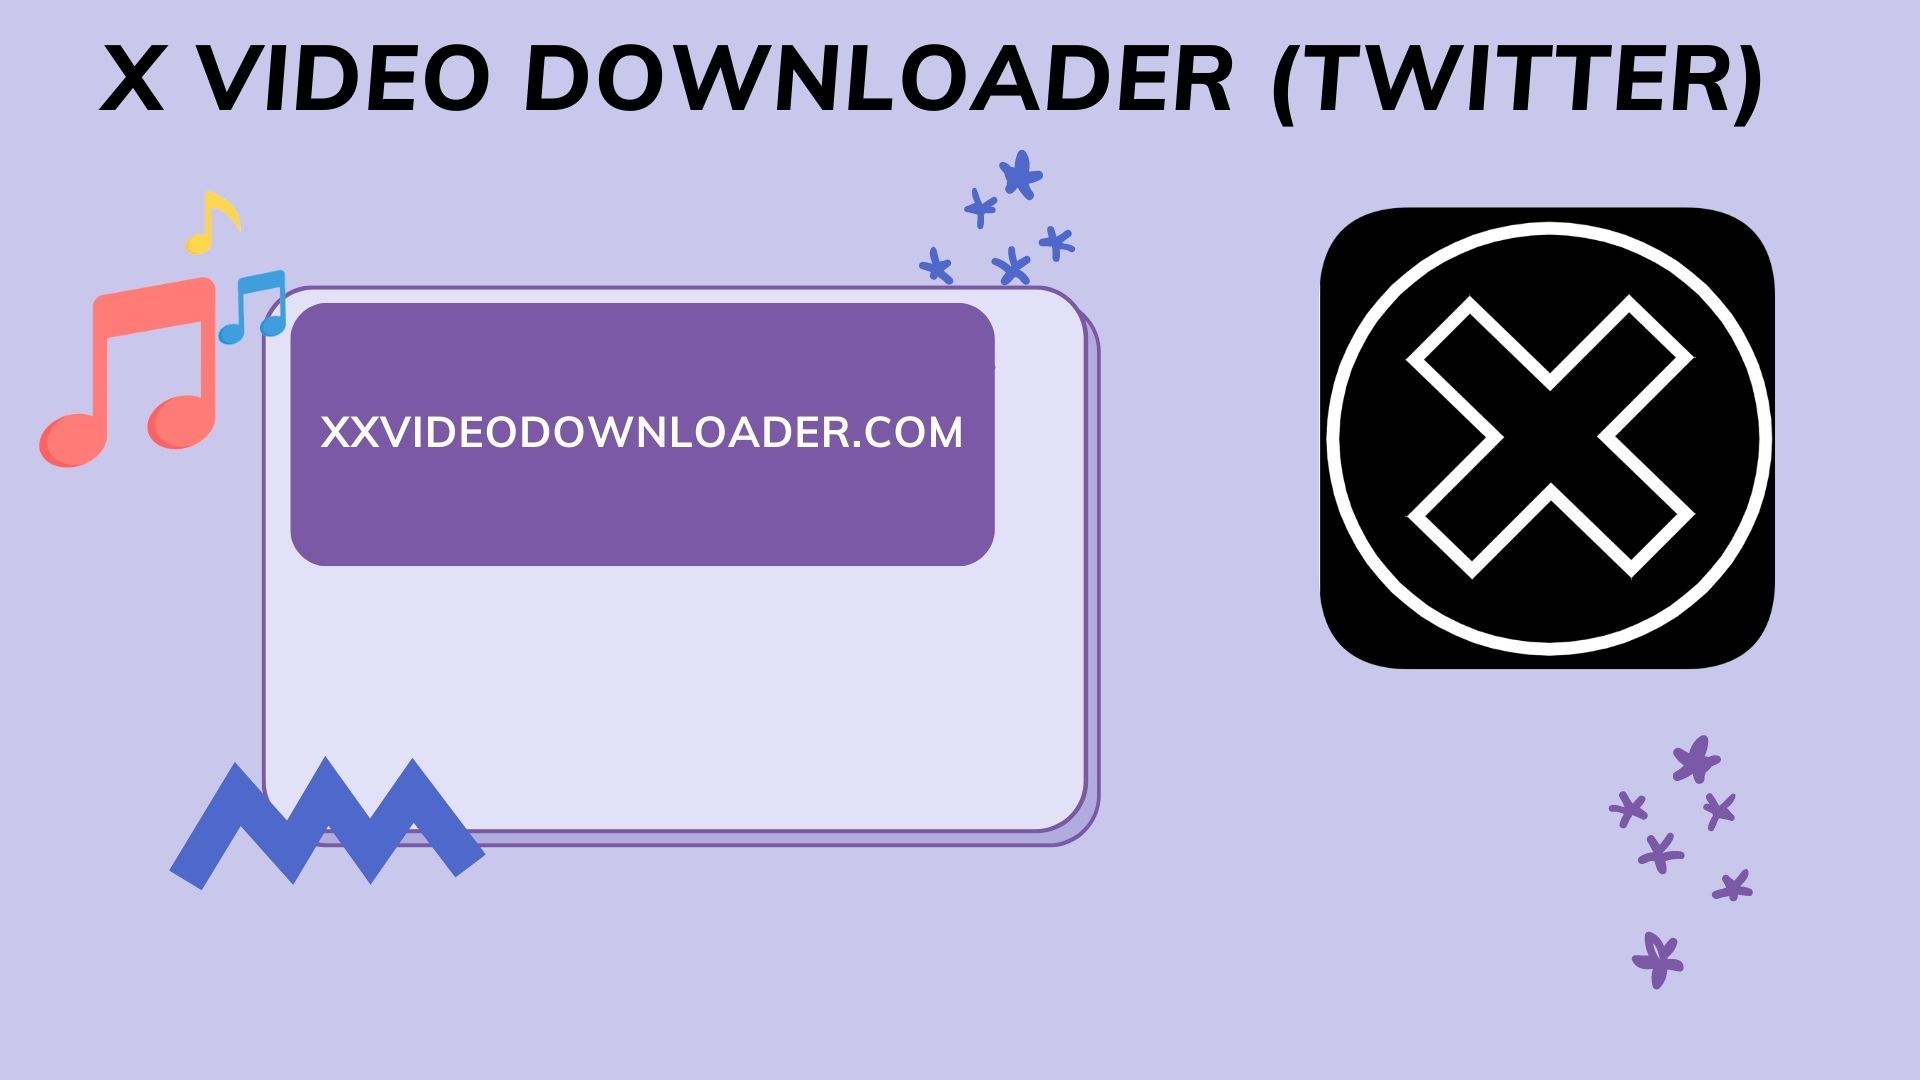 X Video Downloader Landing page